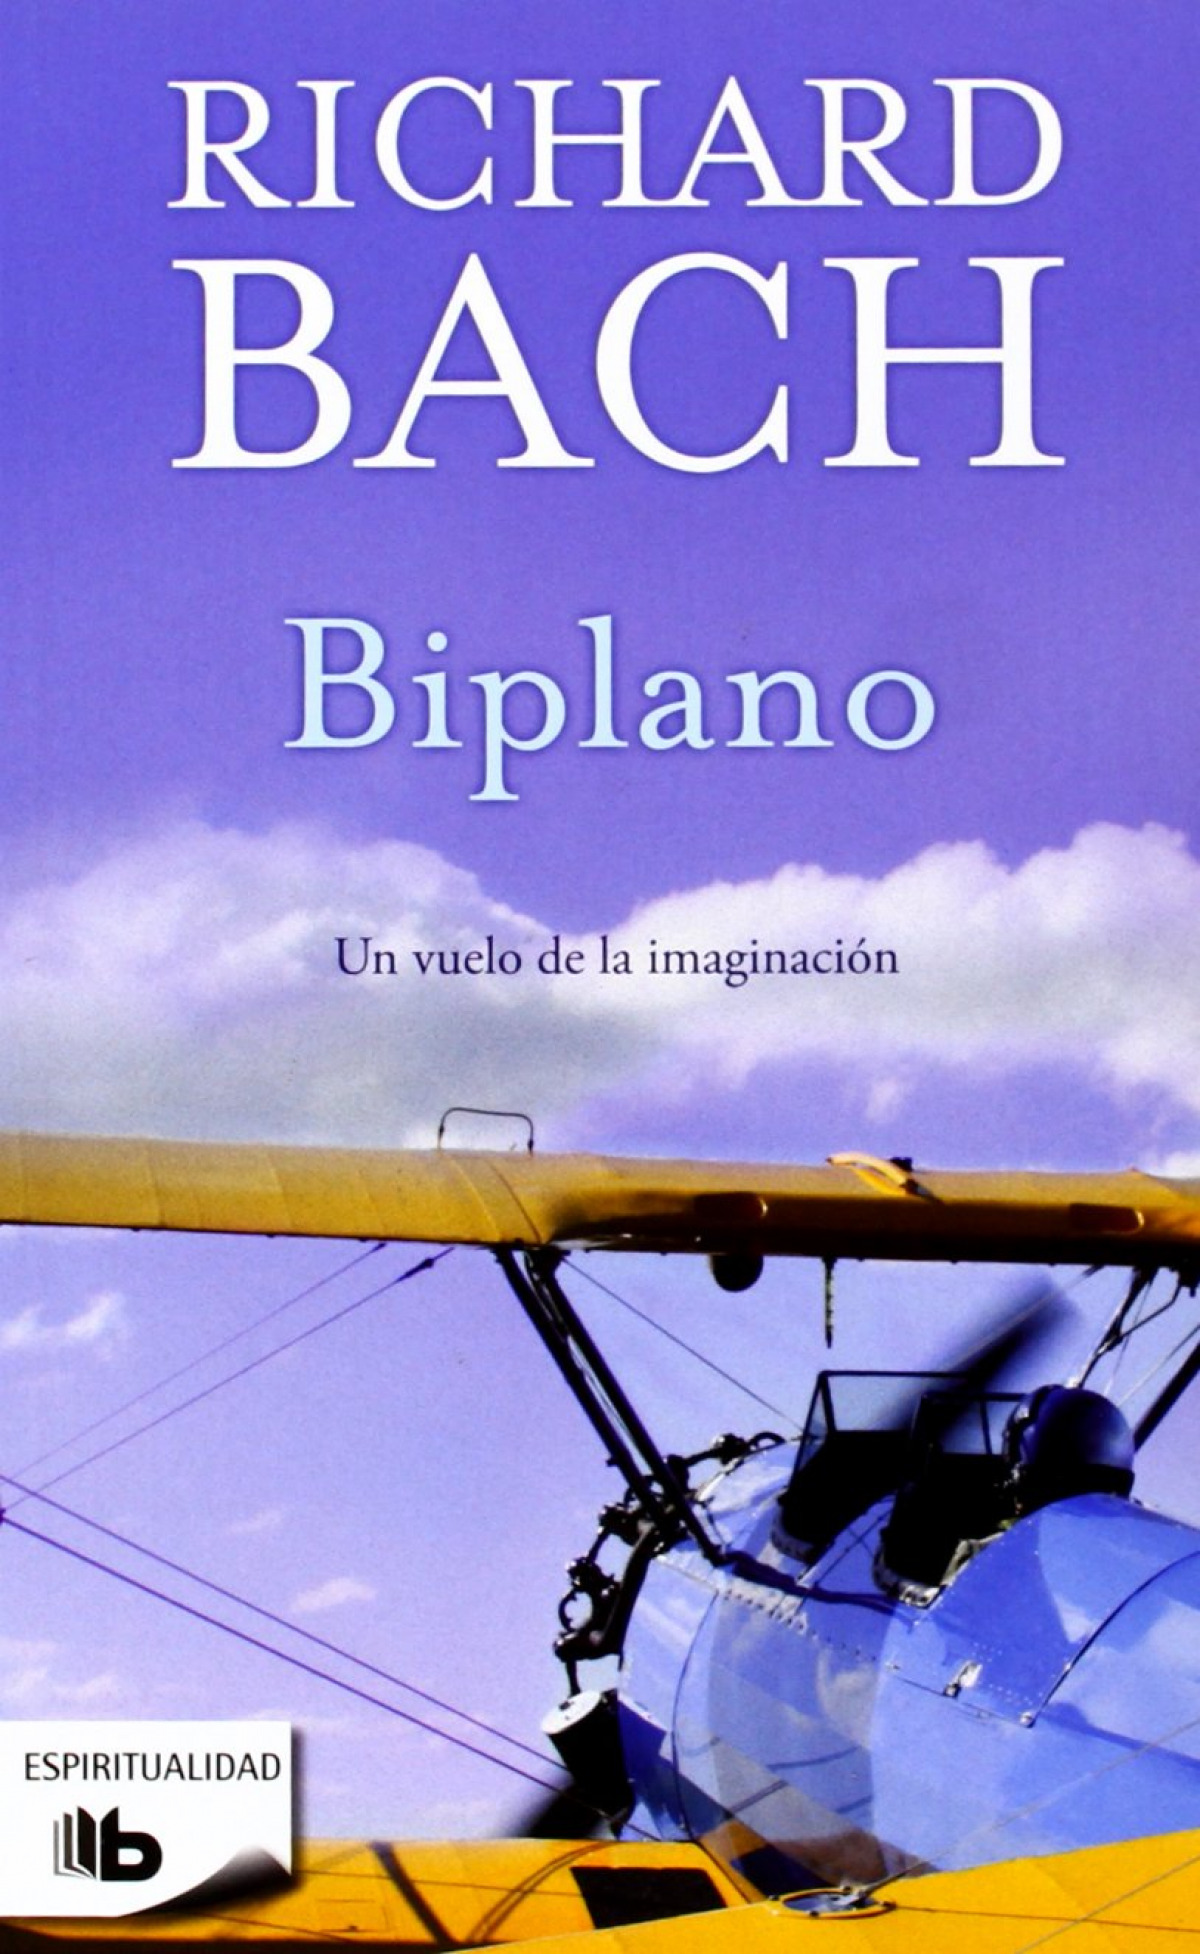 Biplano - Bach, Richard